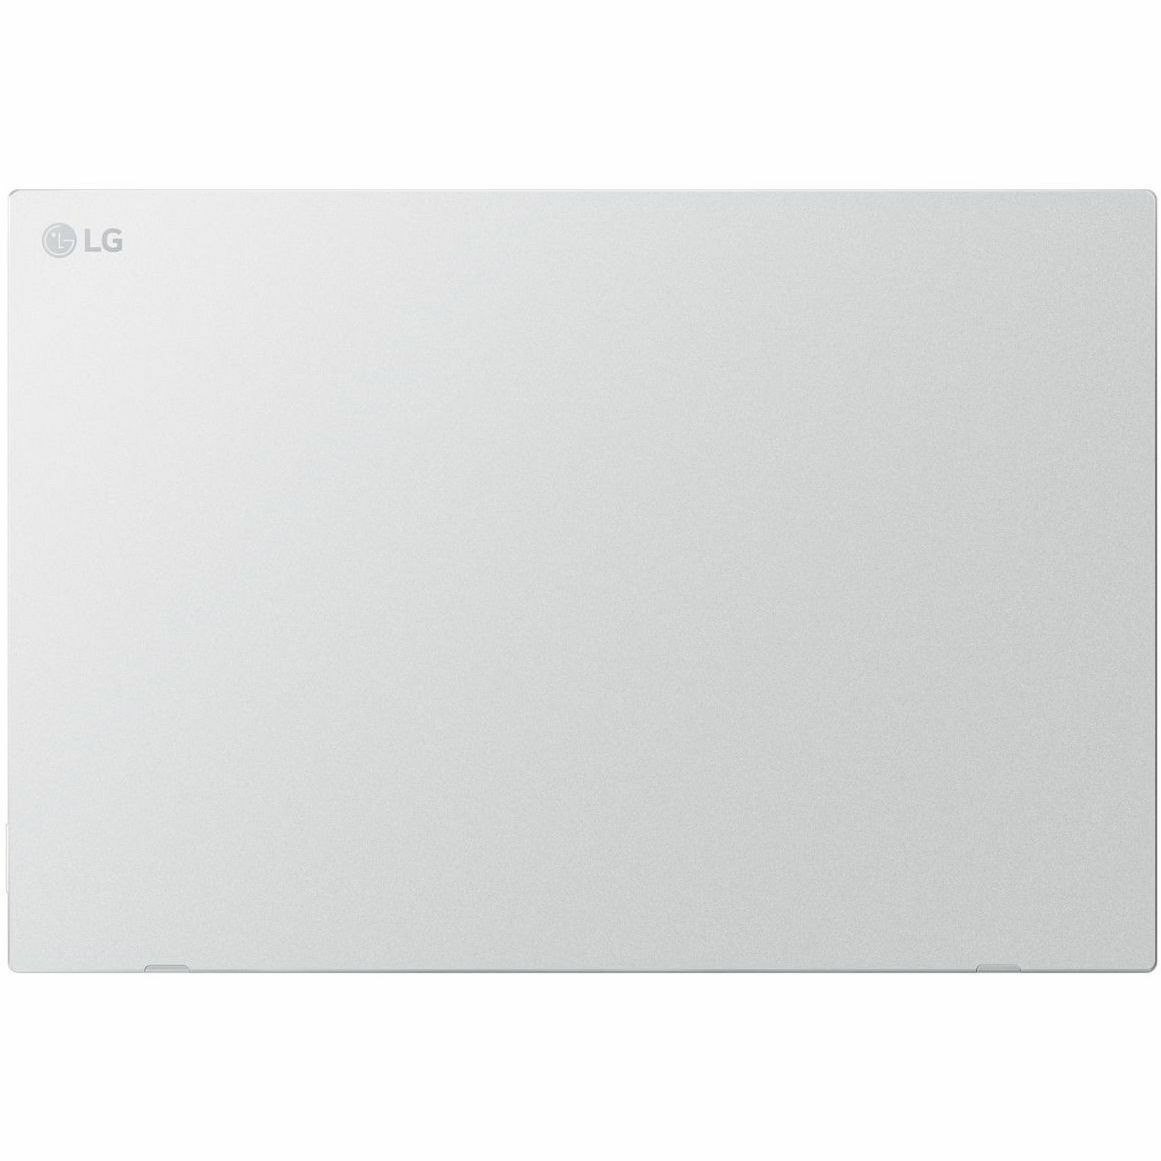 LG gram +view 16MQ70 16" Class WQXGA LCD Monitor - 16:10 - Silver, Black